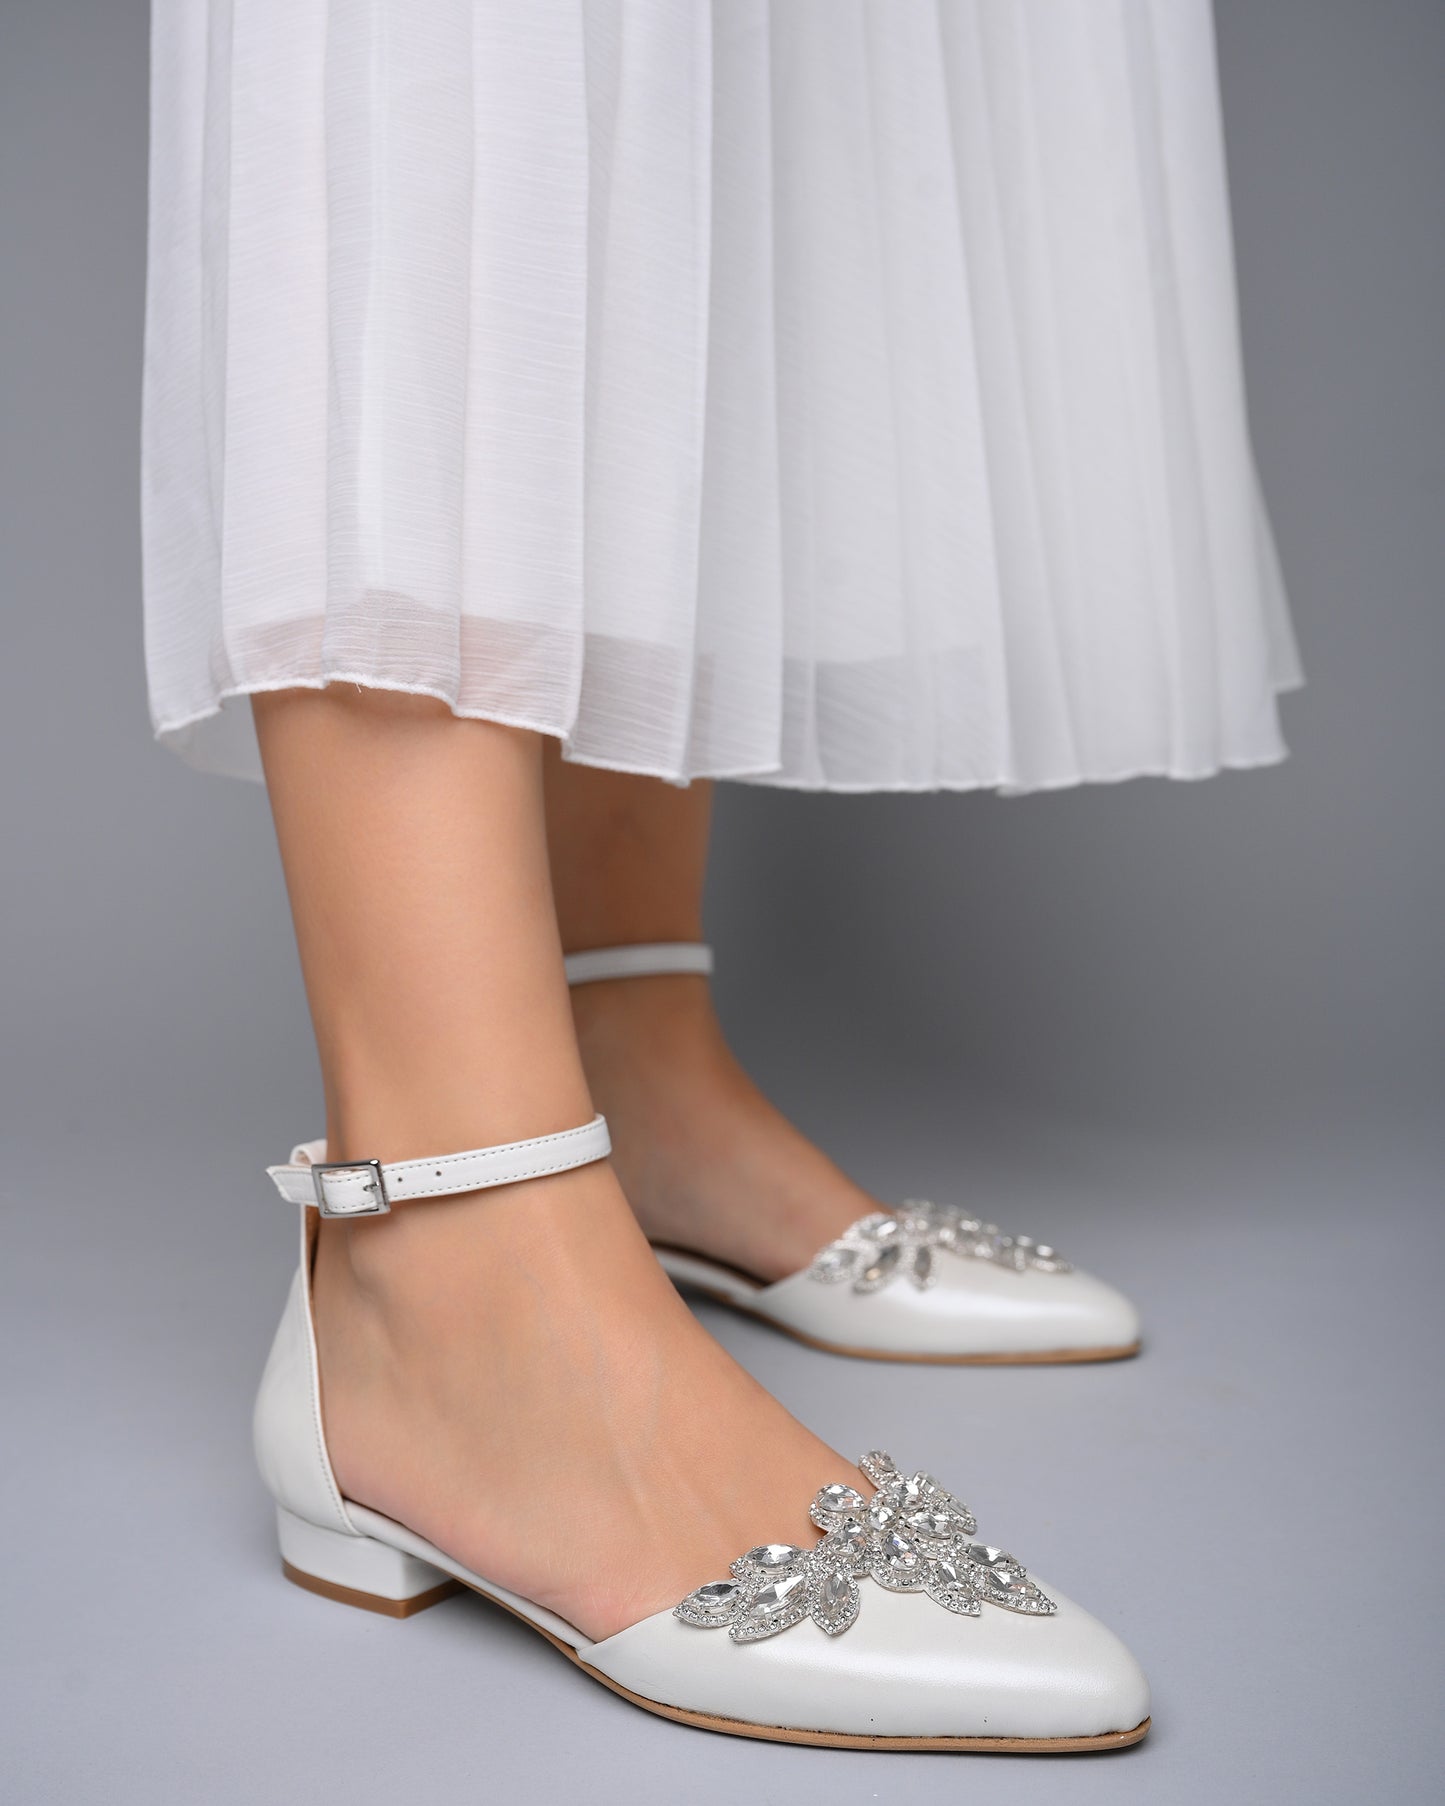 wedding shoes flats